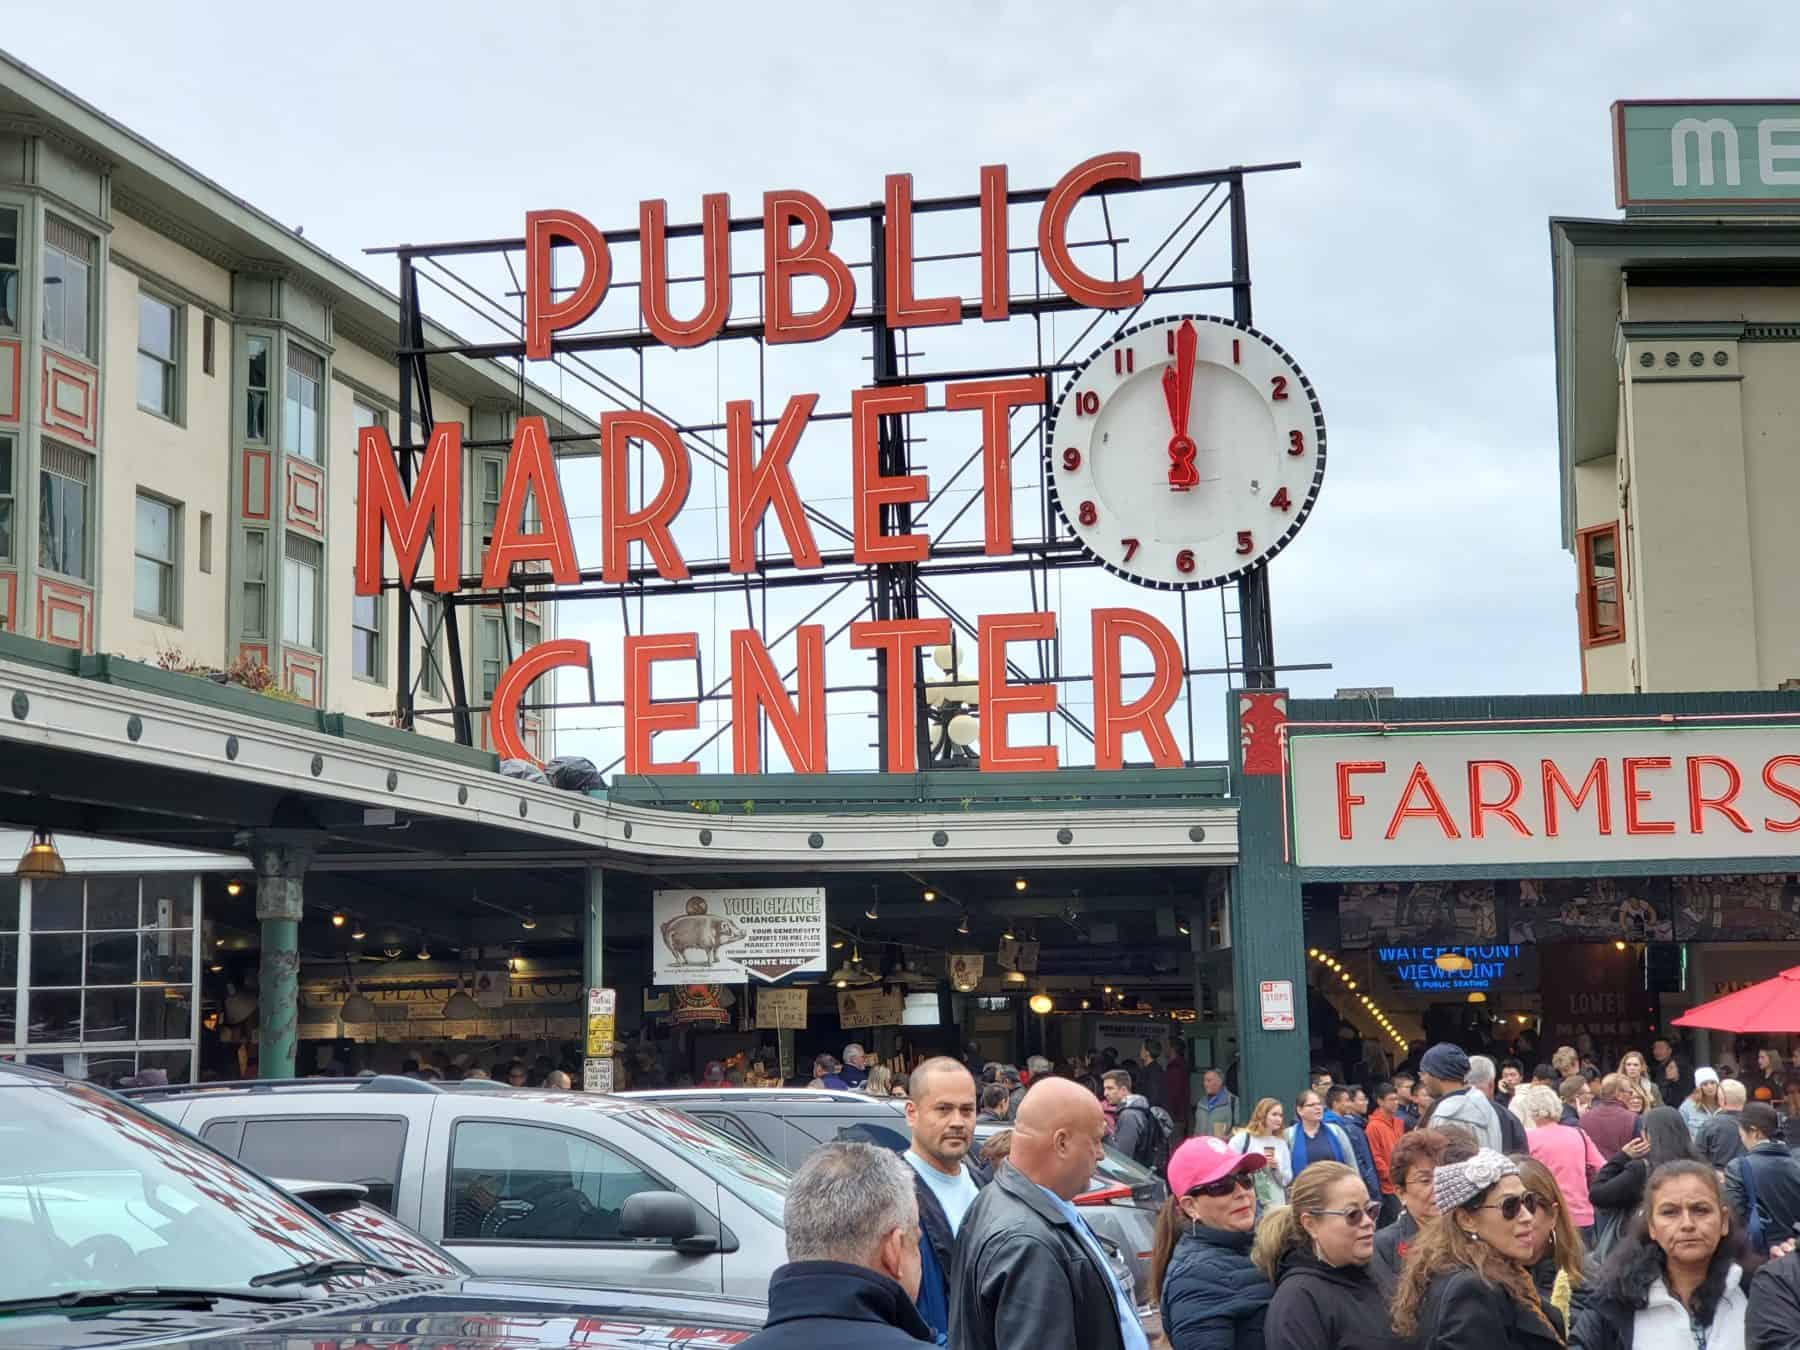 Public Market Seattle - Free Tours by Foot